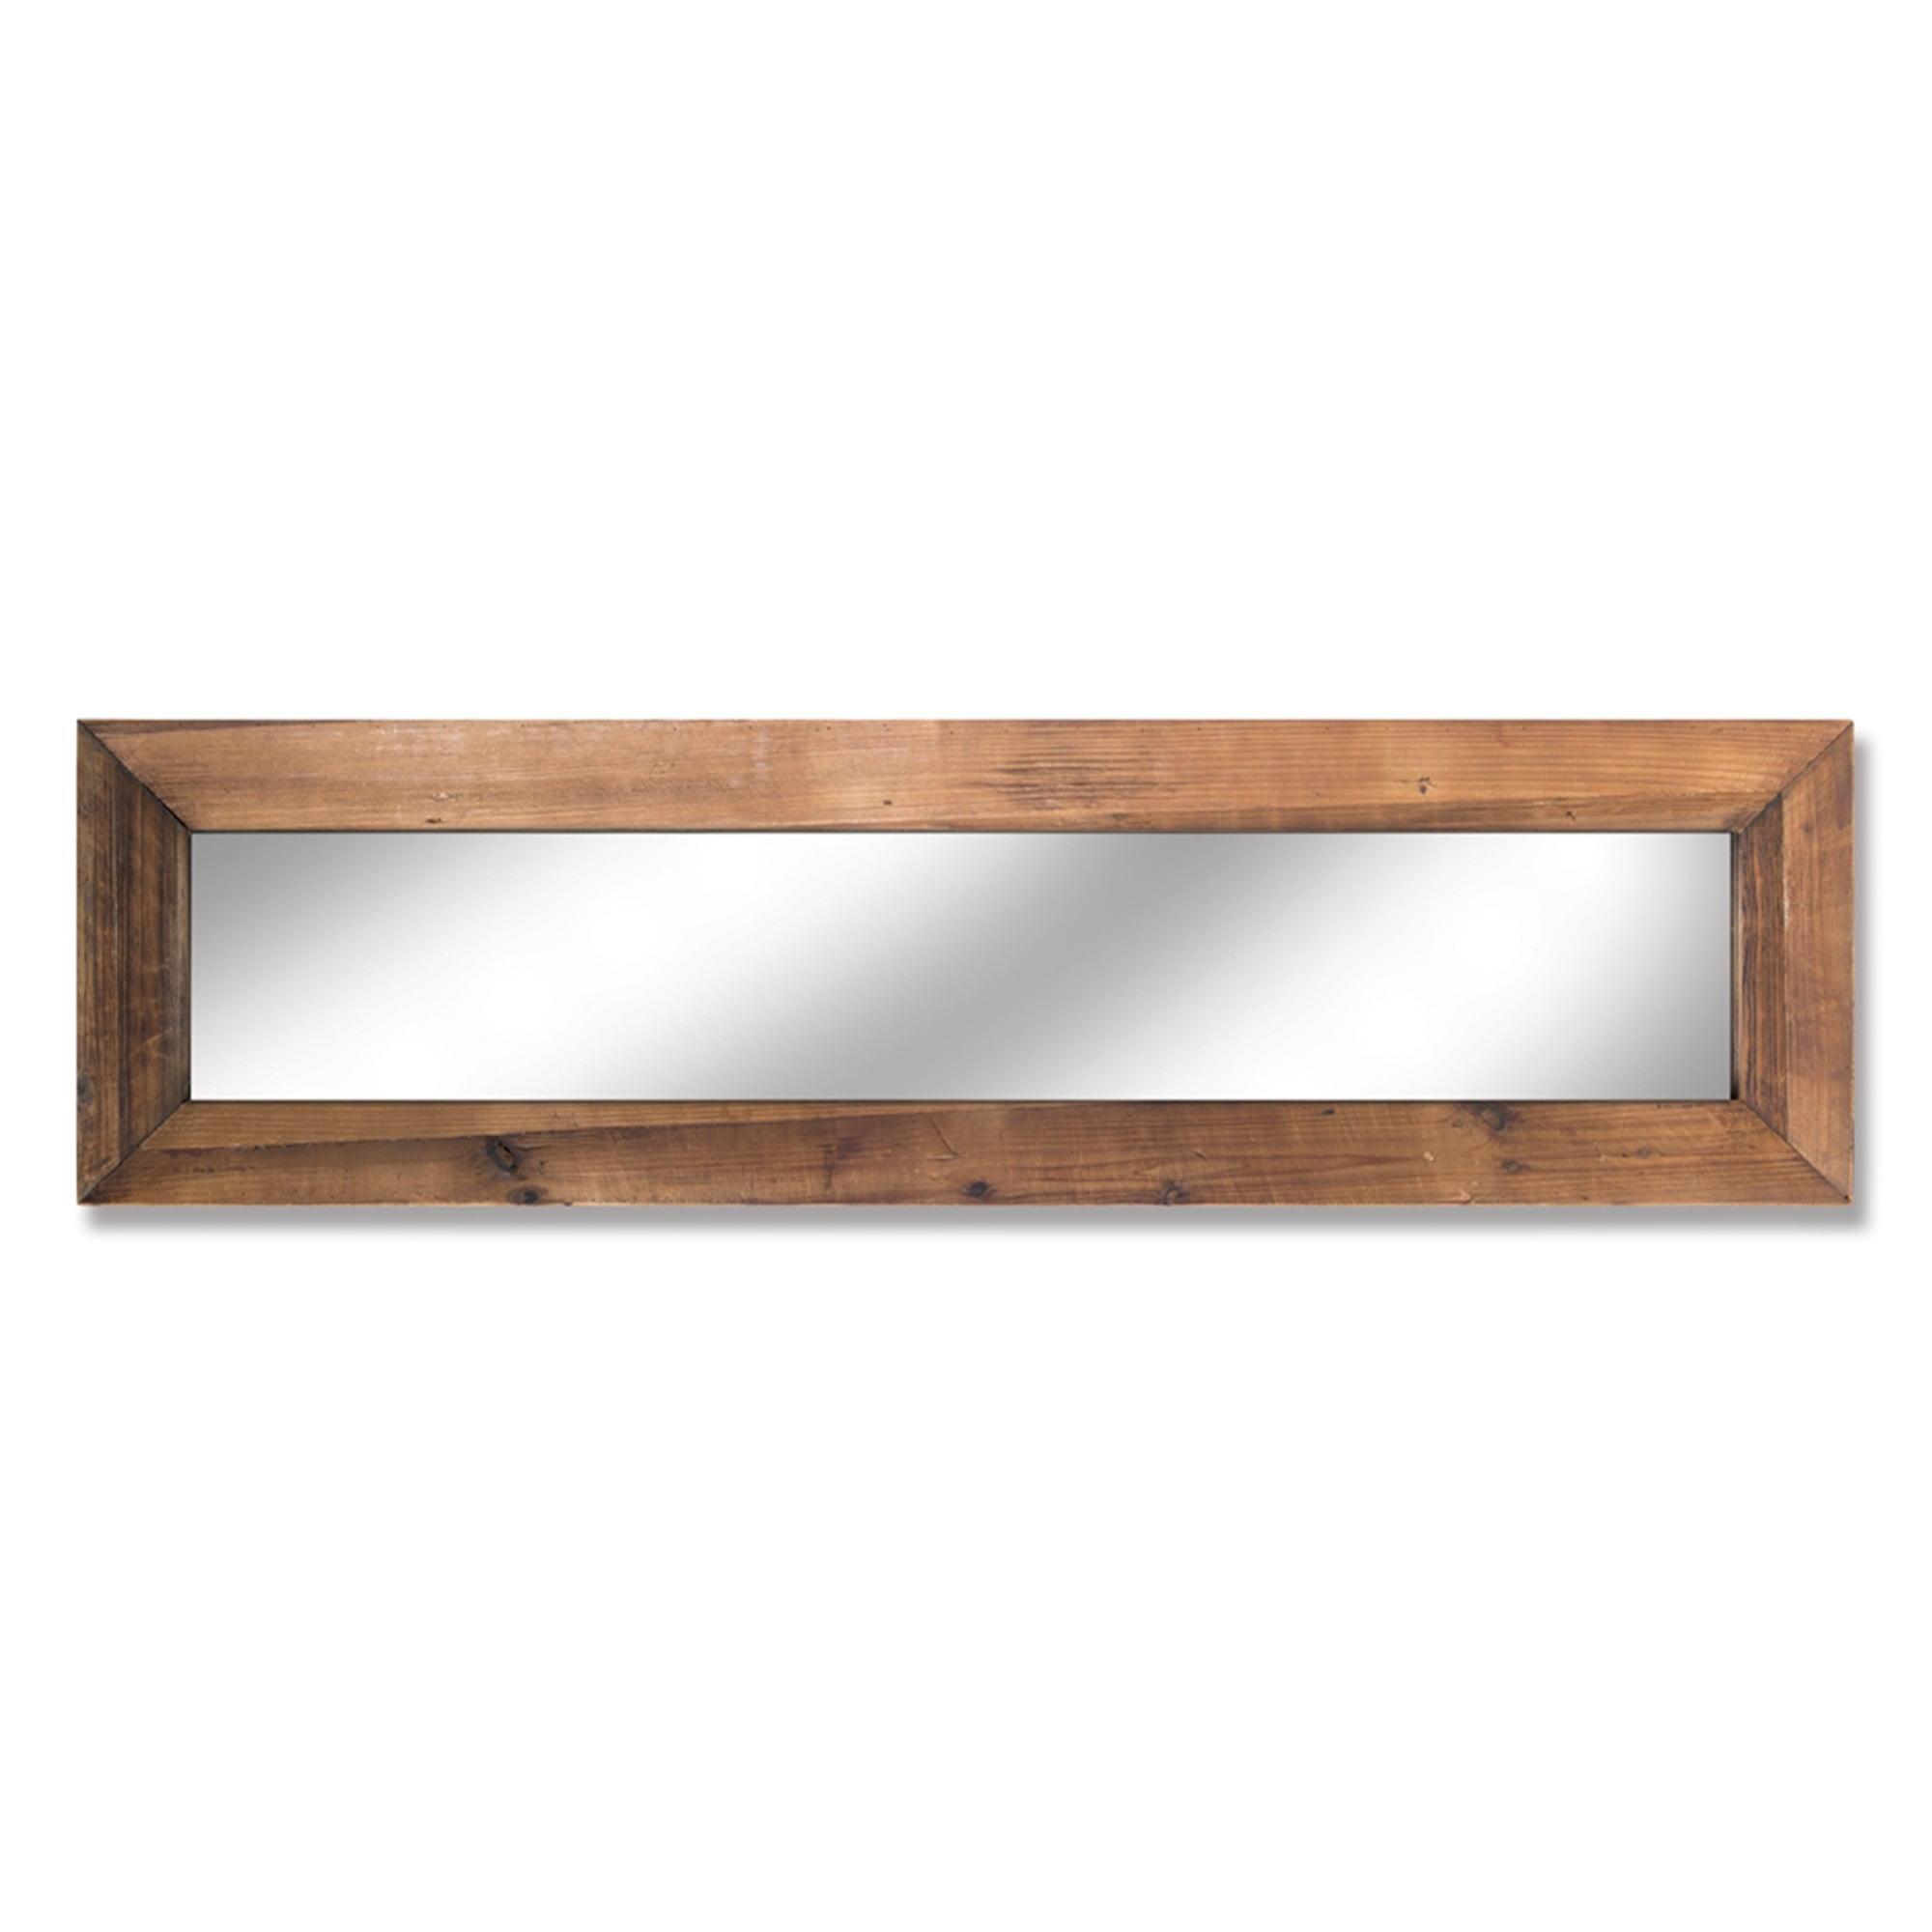 Classic Warm Wooden Full-Length Rectangular Mirror